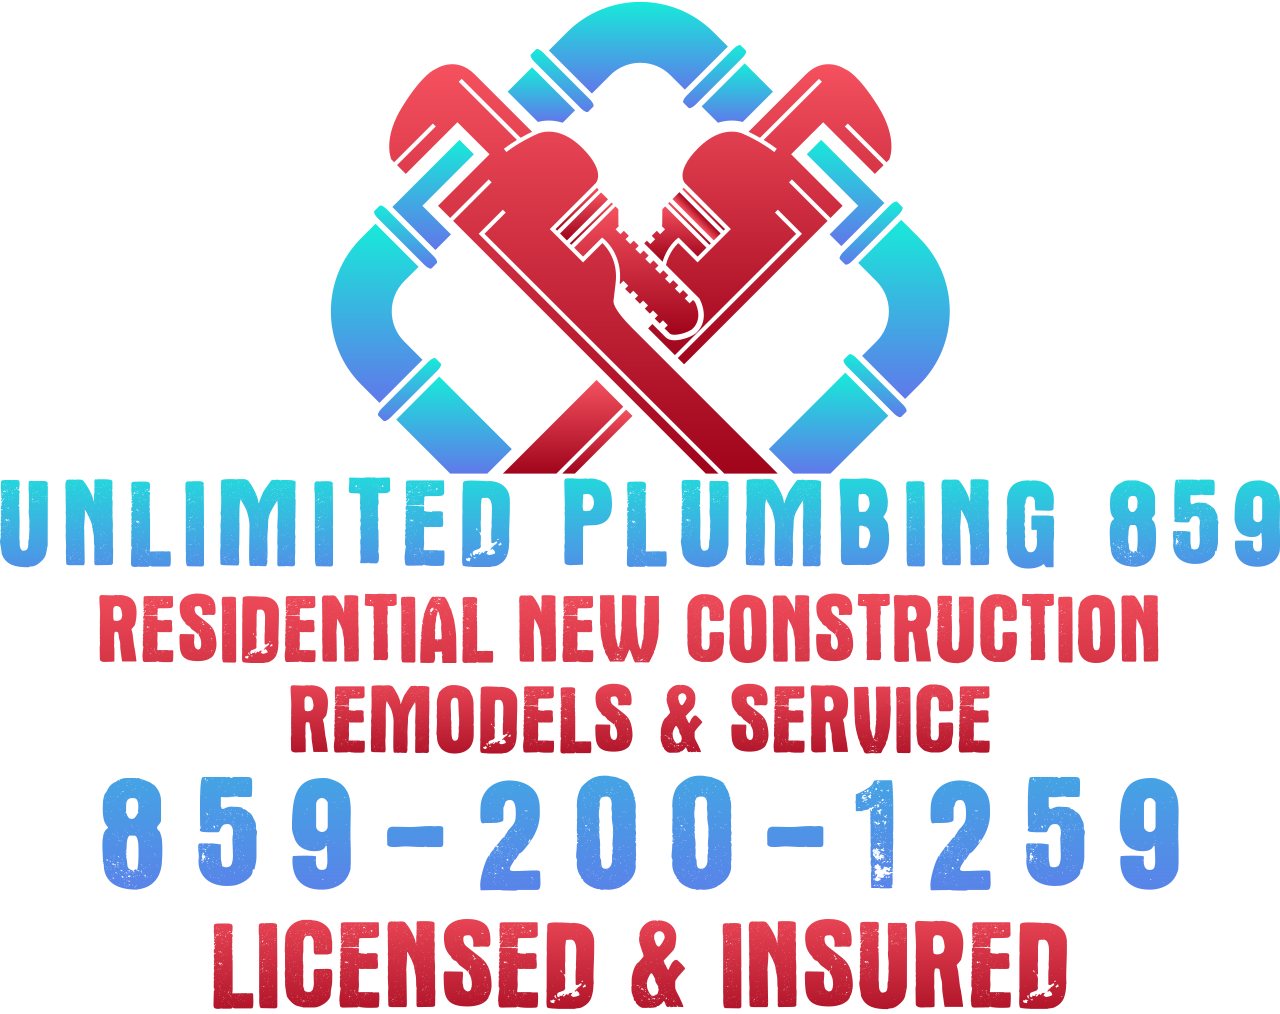 Unlimited Plumbing 859's logo